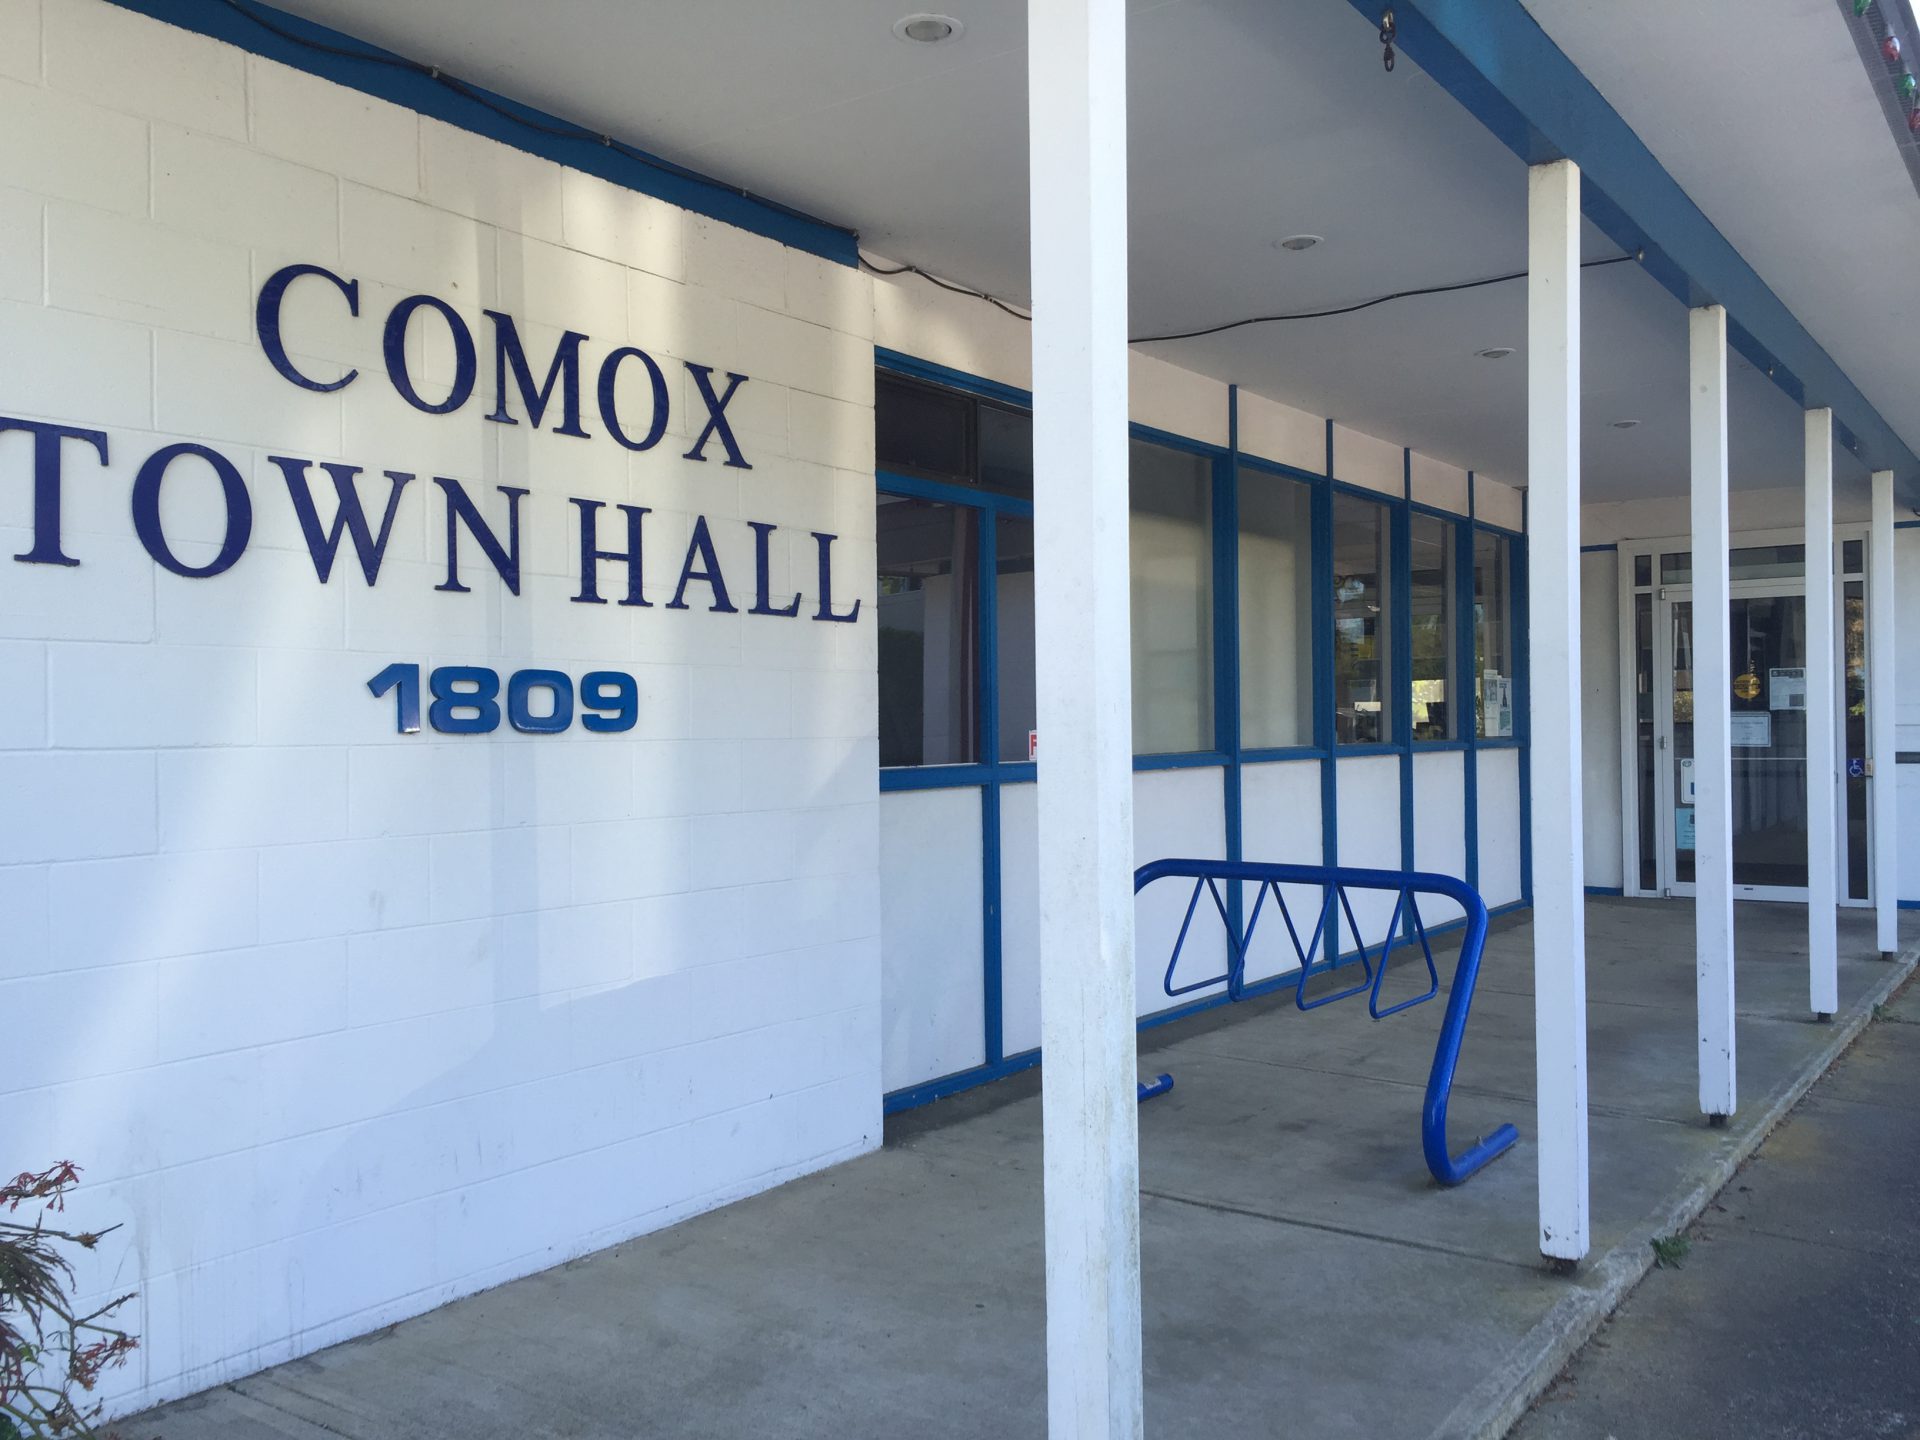 Former Comox mayor passes away